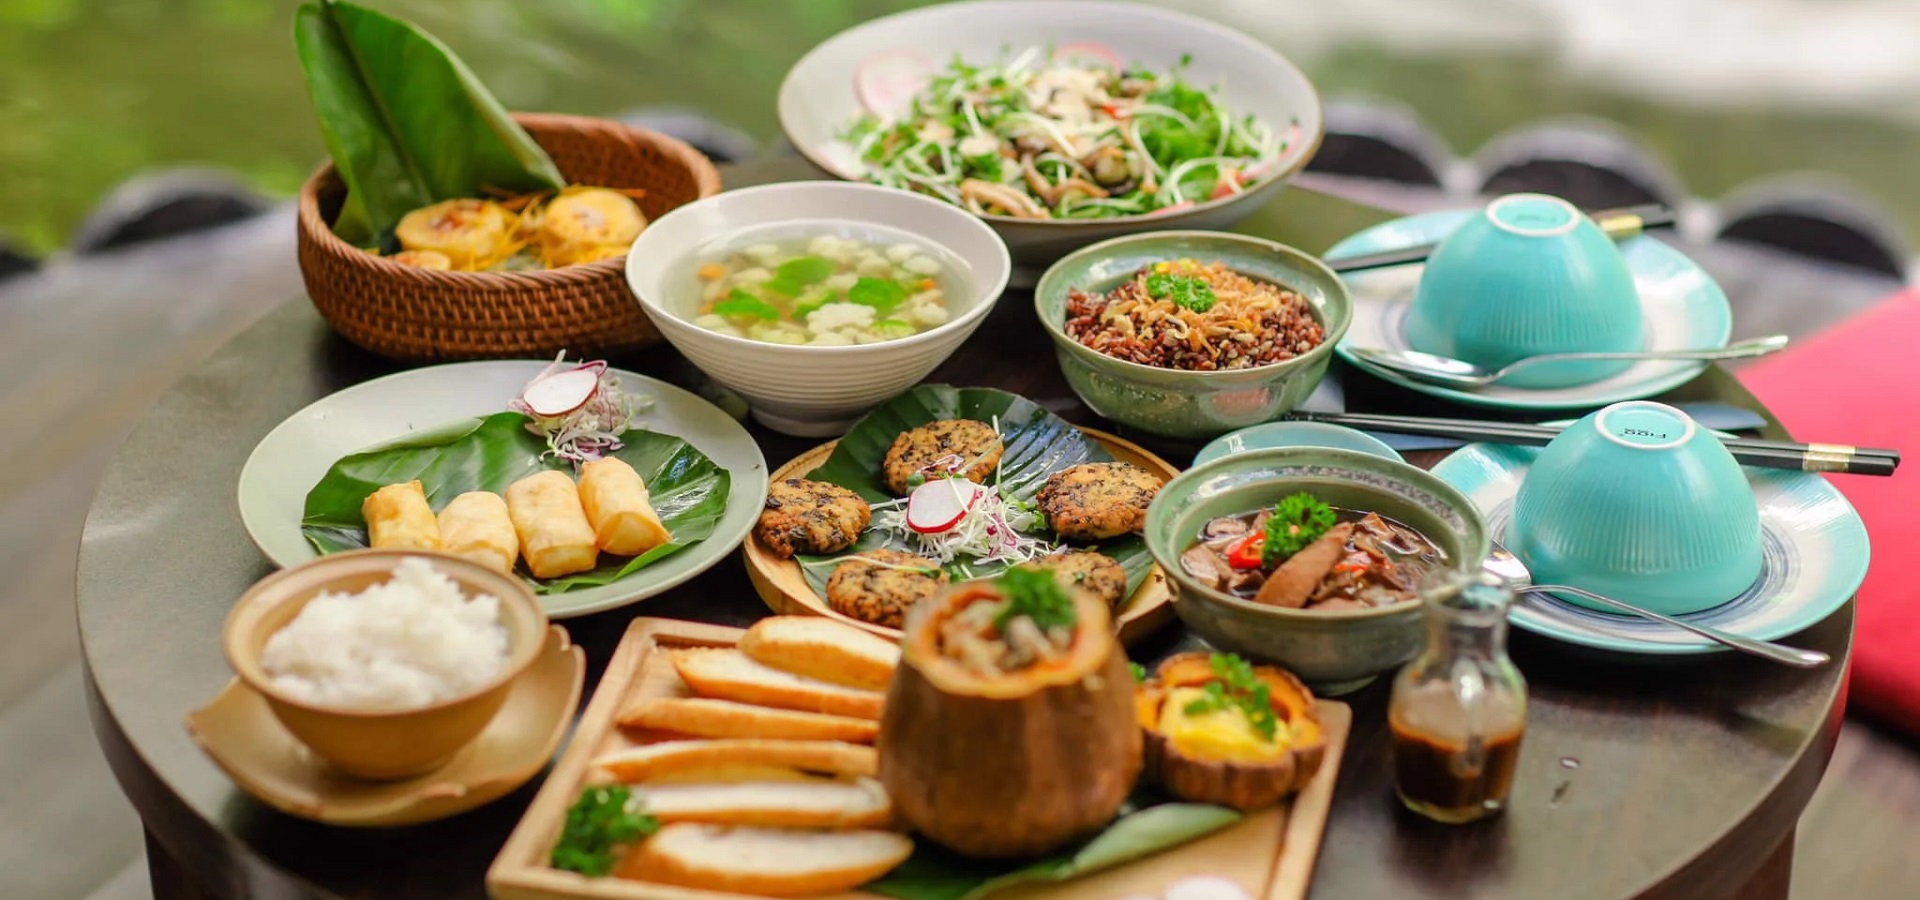 vietnam vegetarian restaurant banner